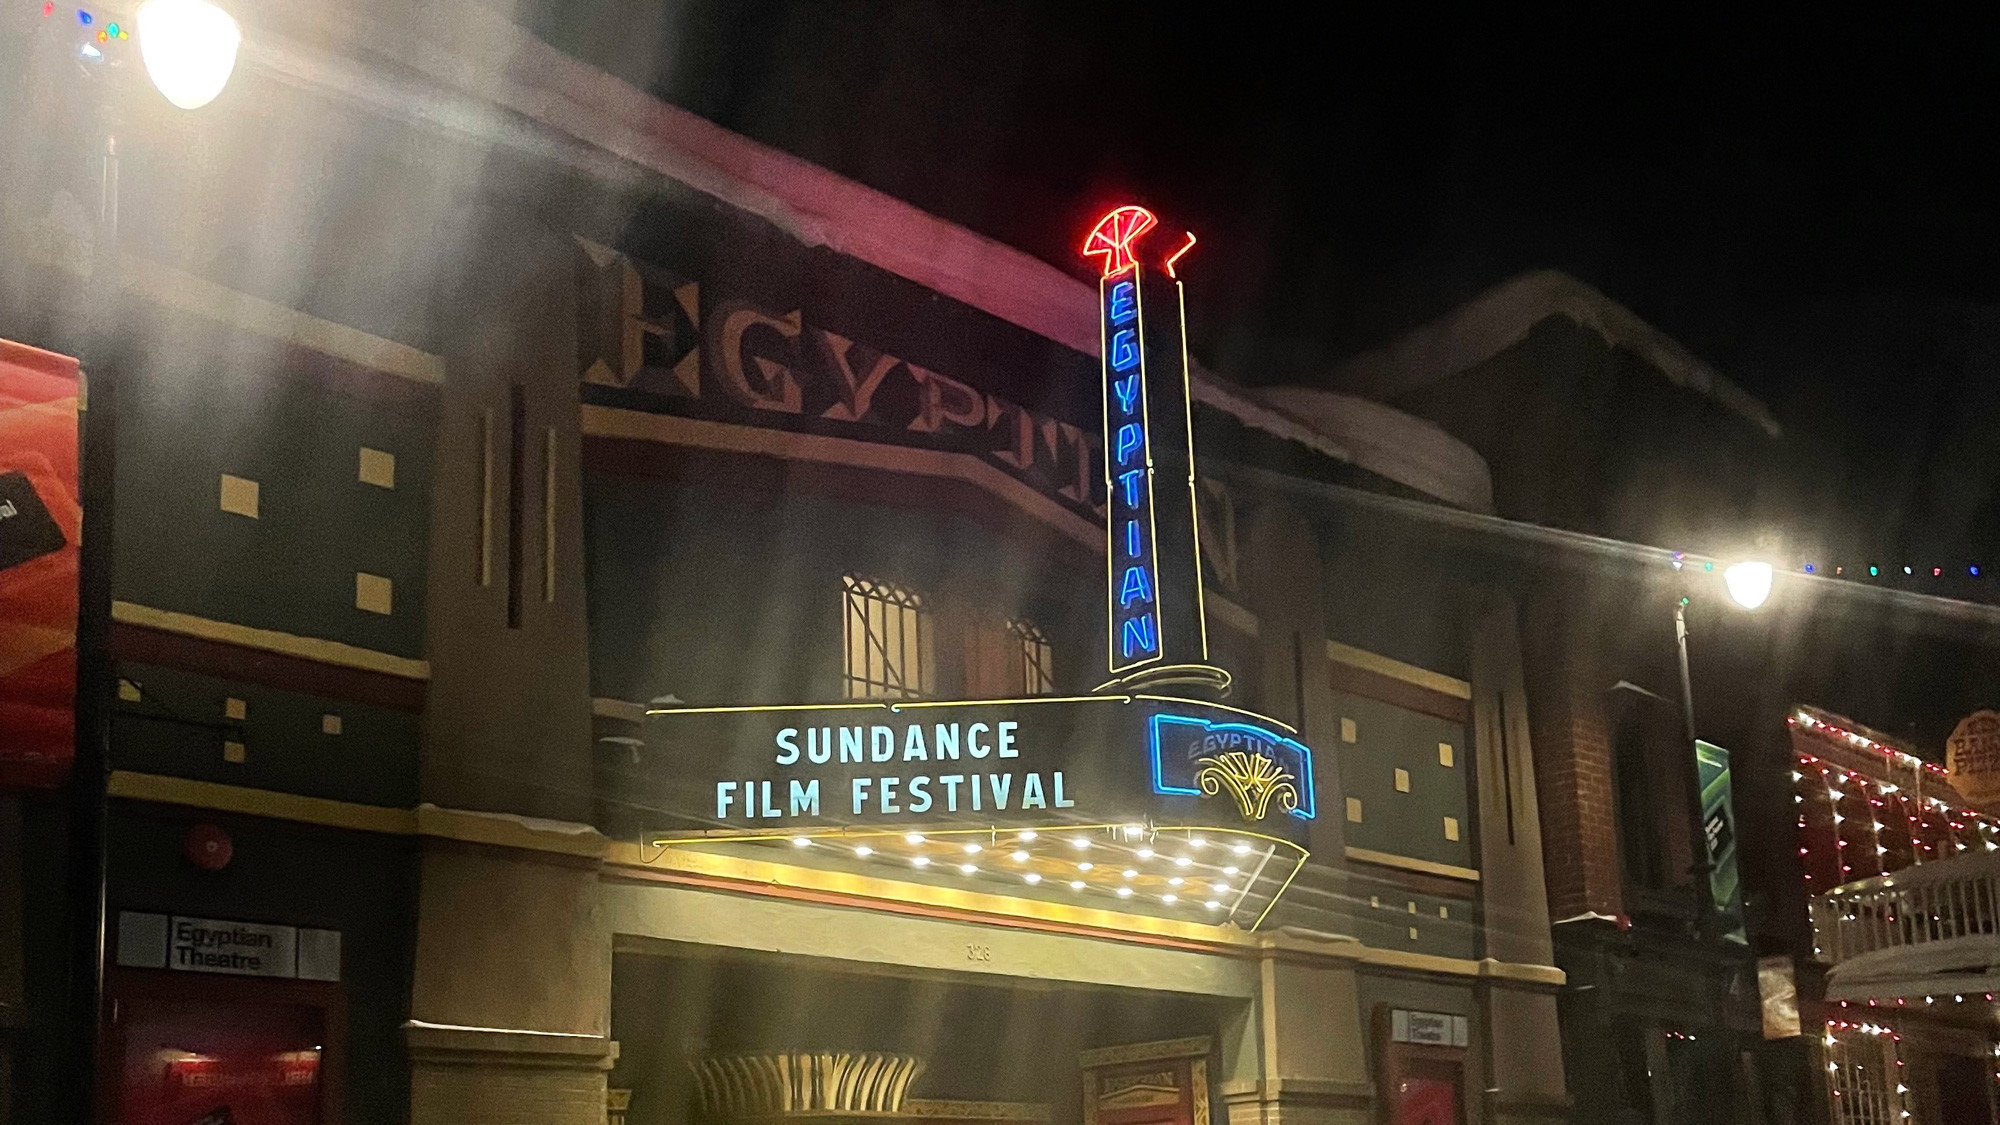 Sundance FIlm Festival Theater